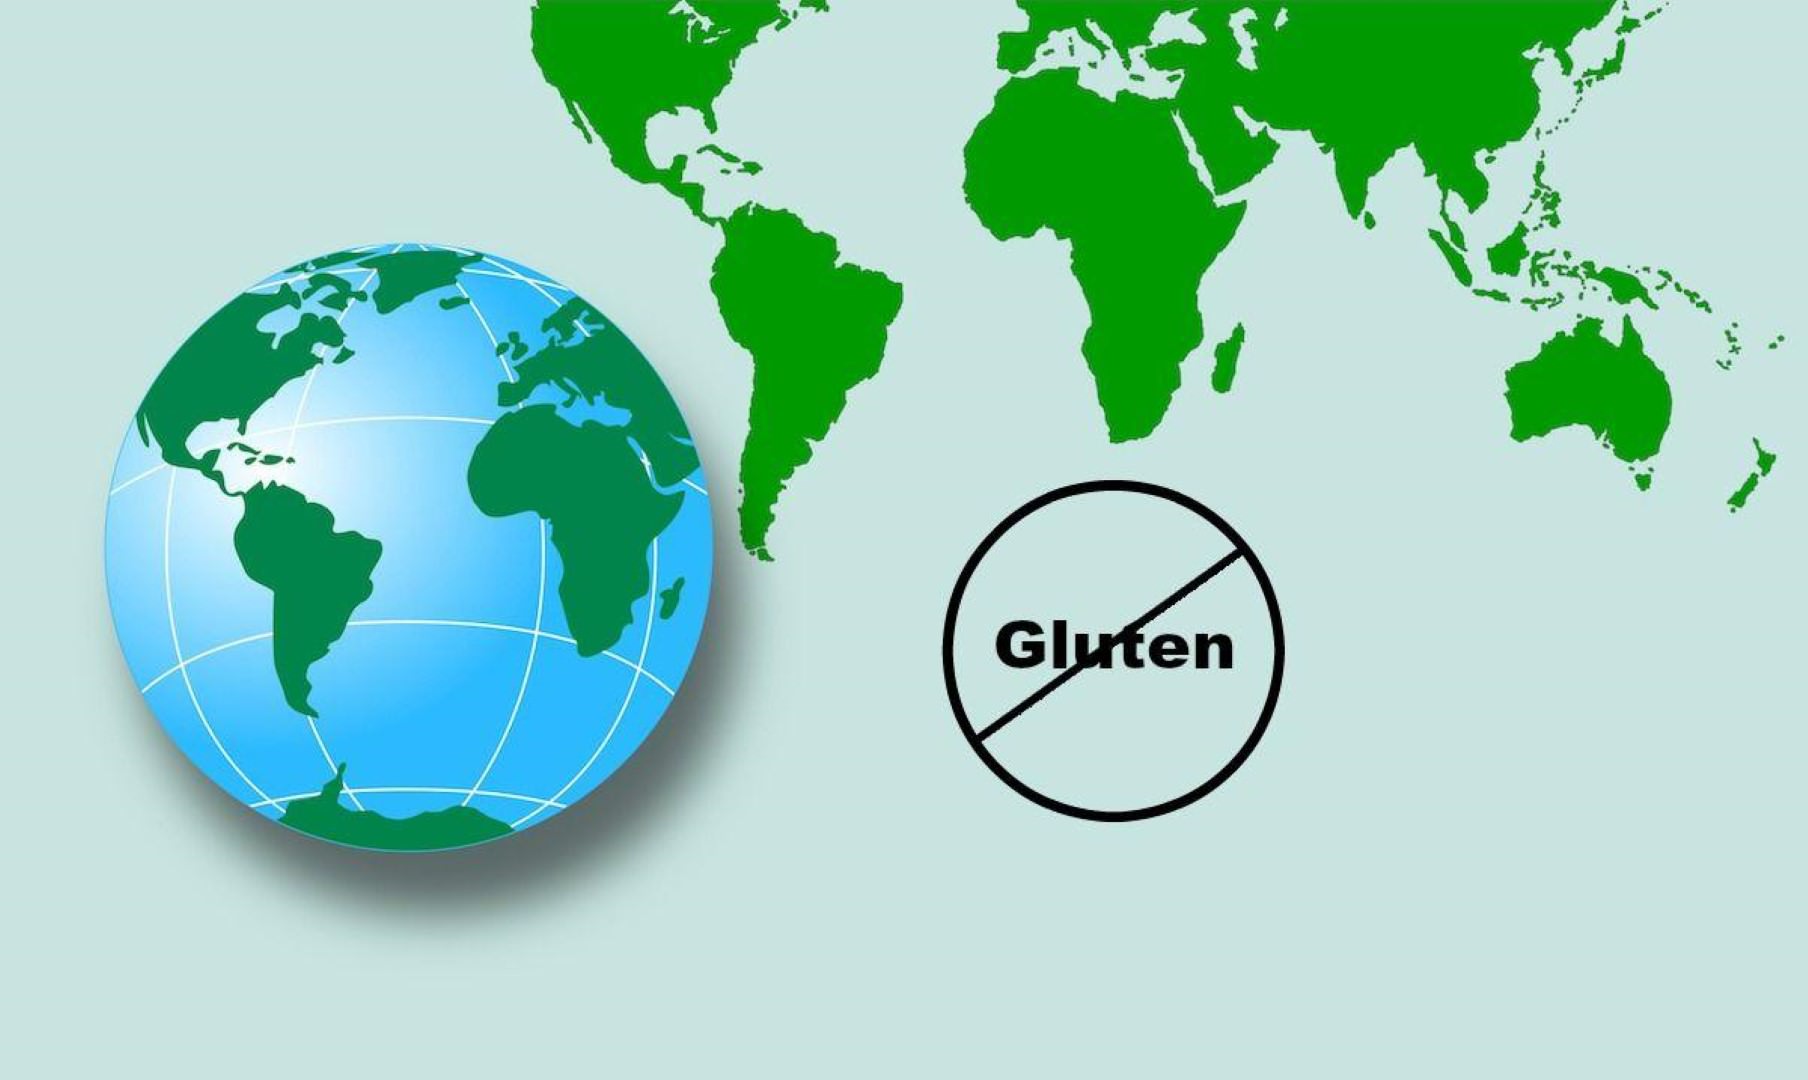 celiac disease around the world